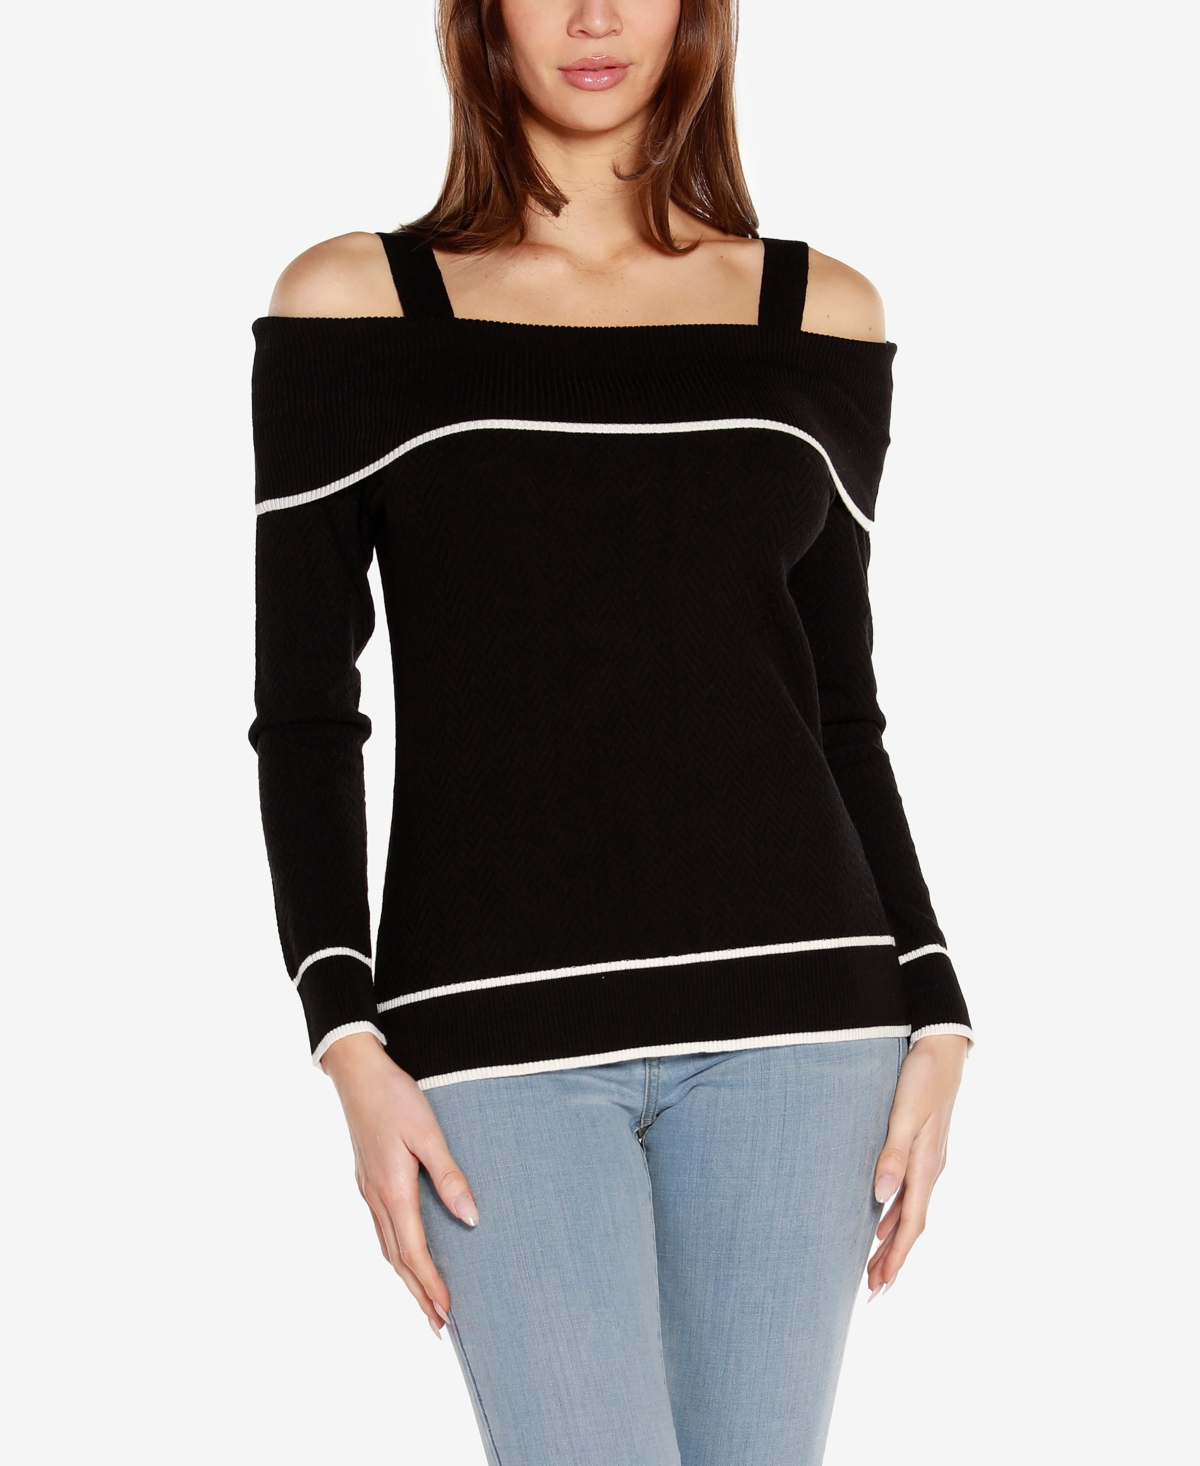 Belldini Women's Black Label Off The Shoulder Sweater